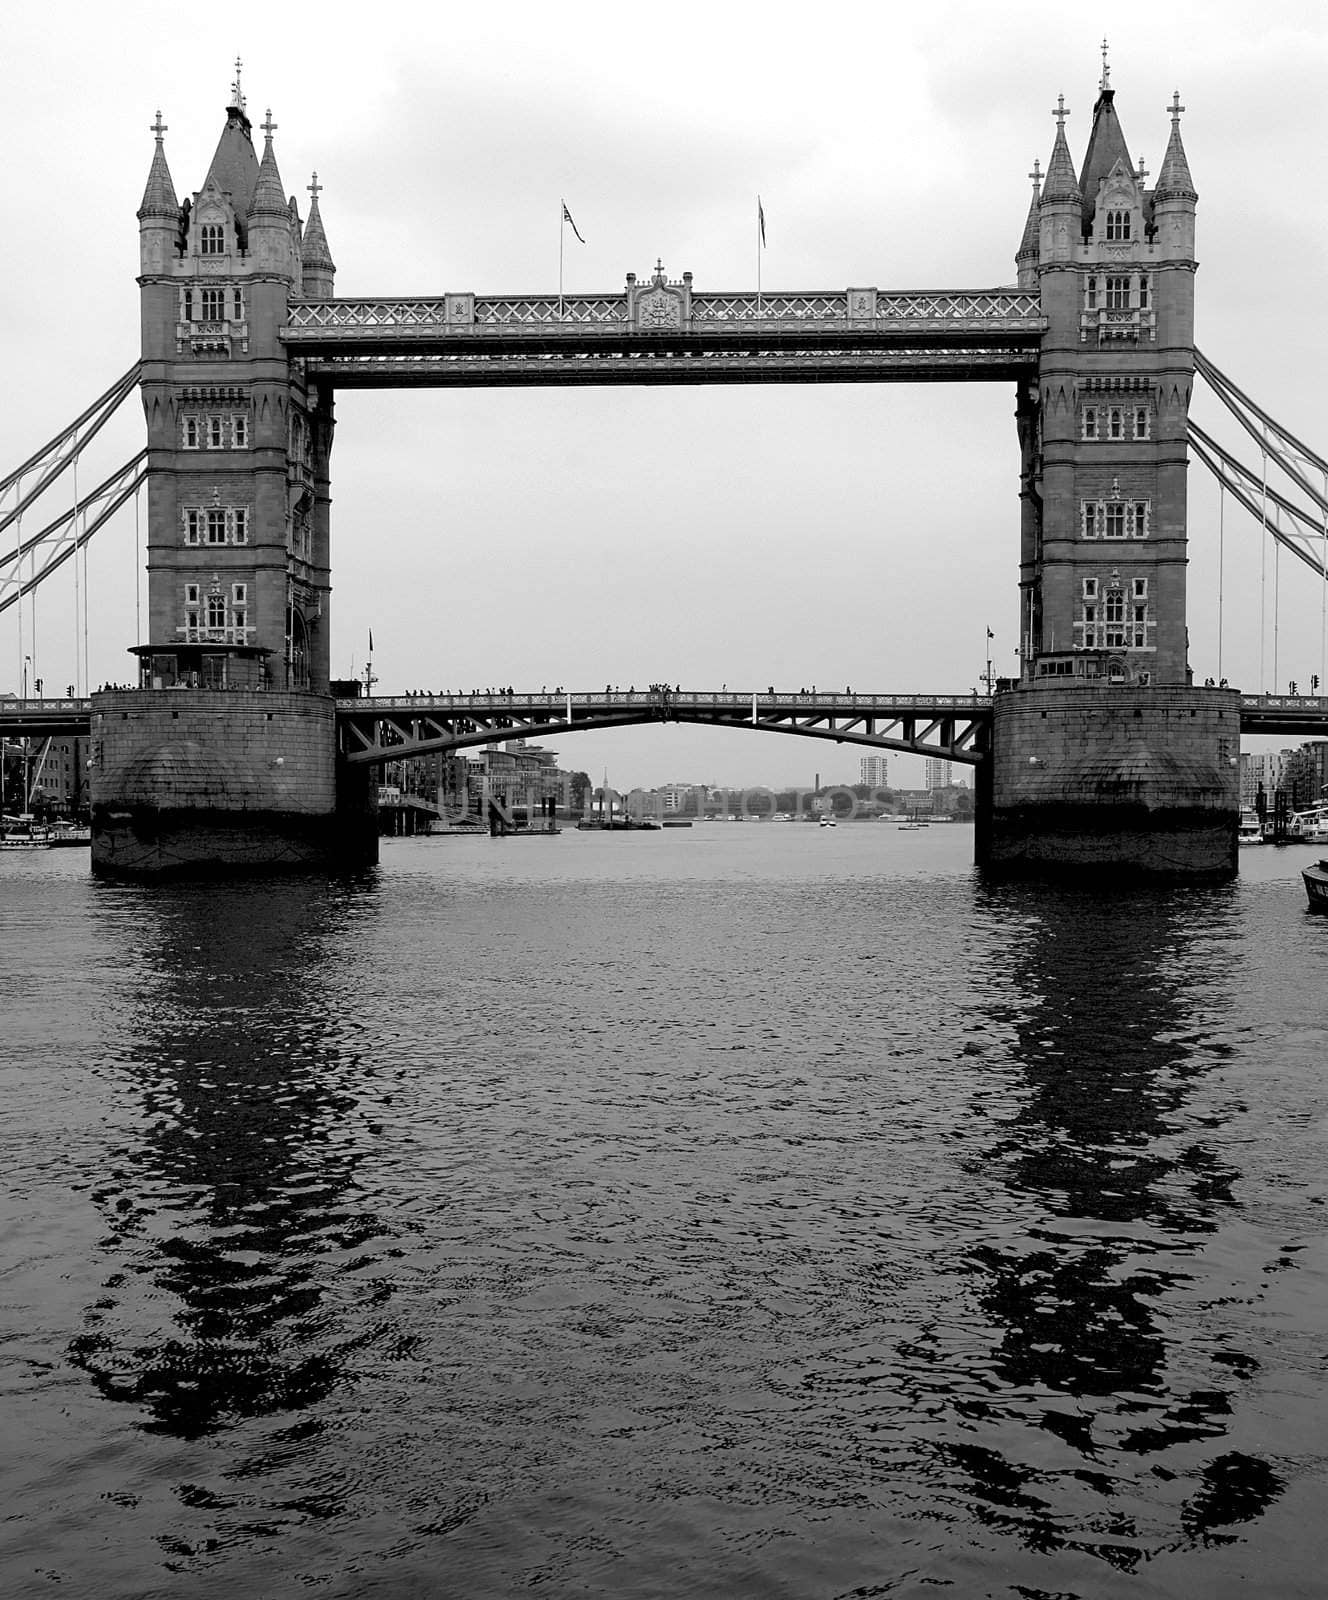 Image of London's famous Tower Bridge.